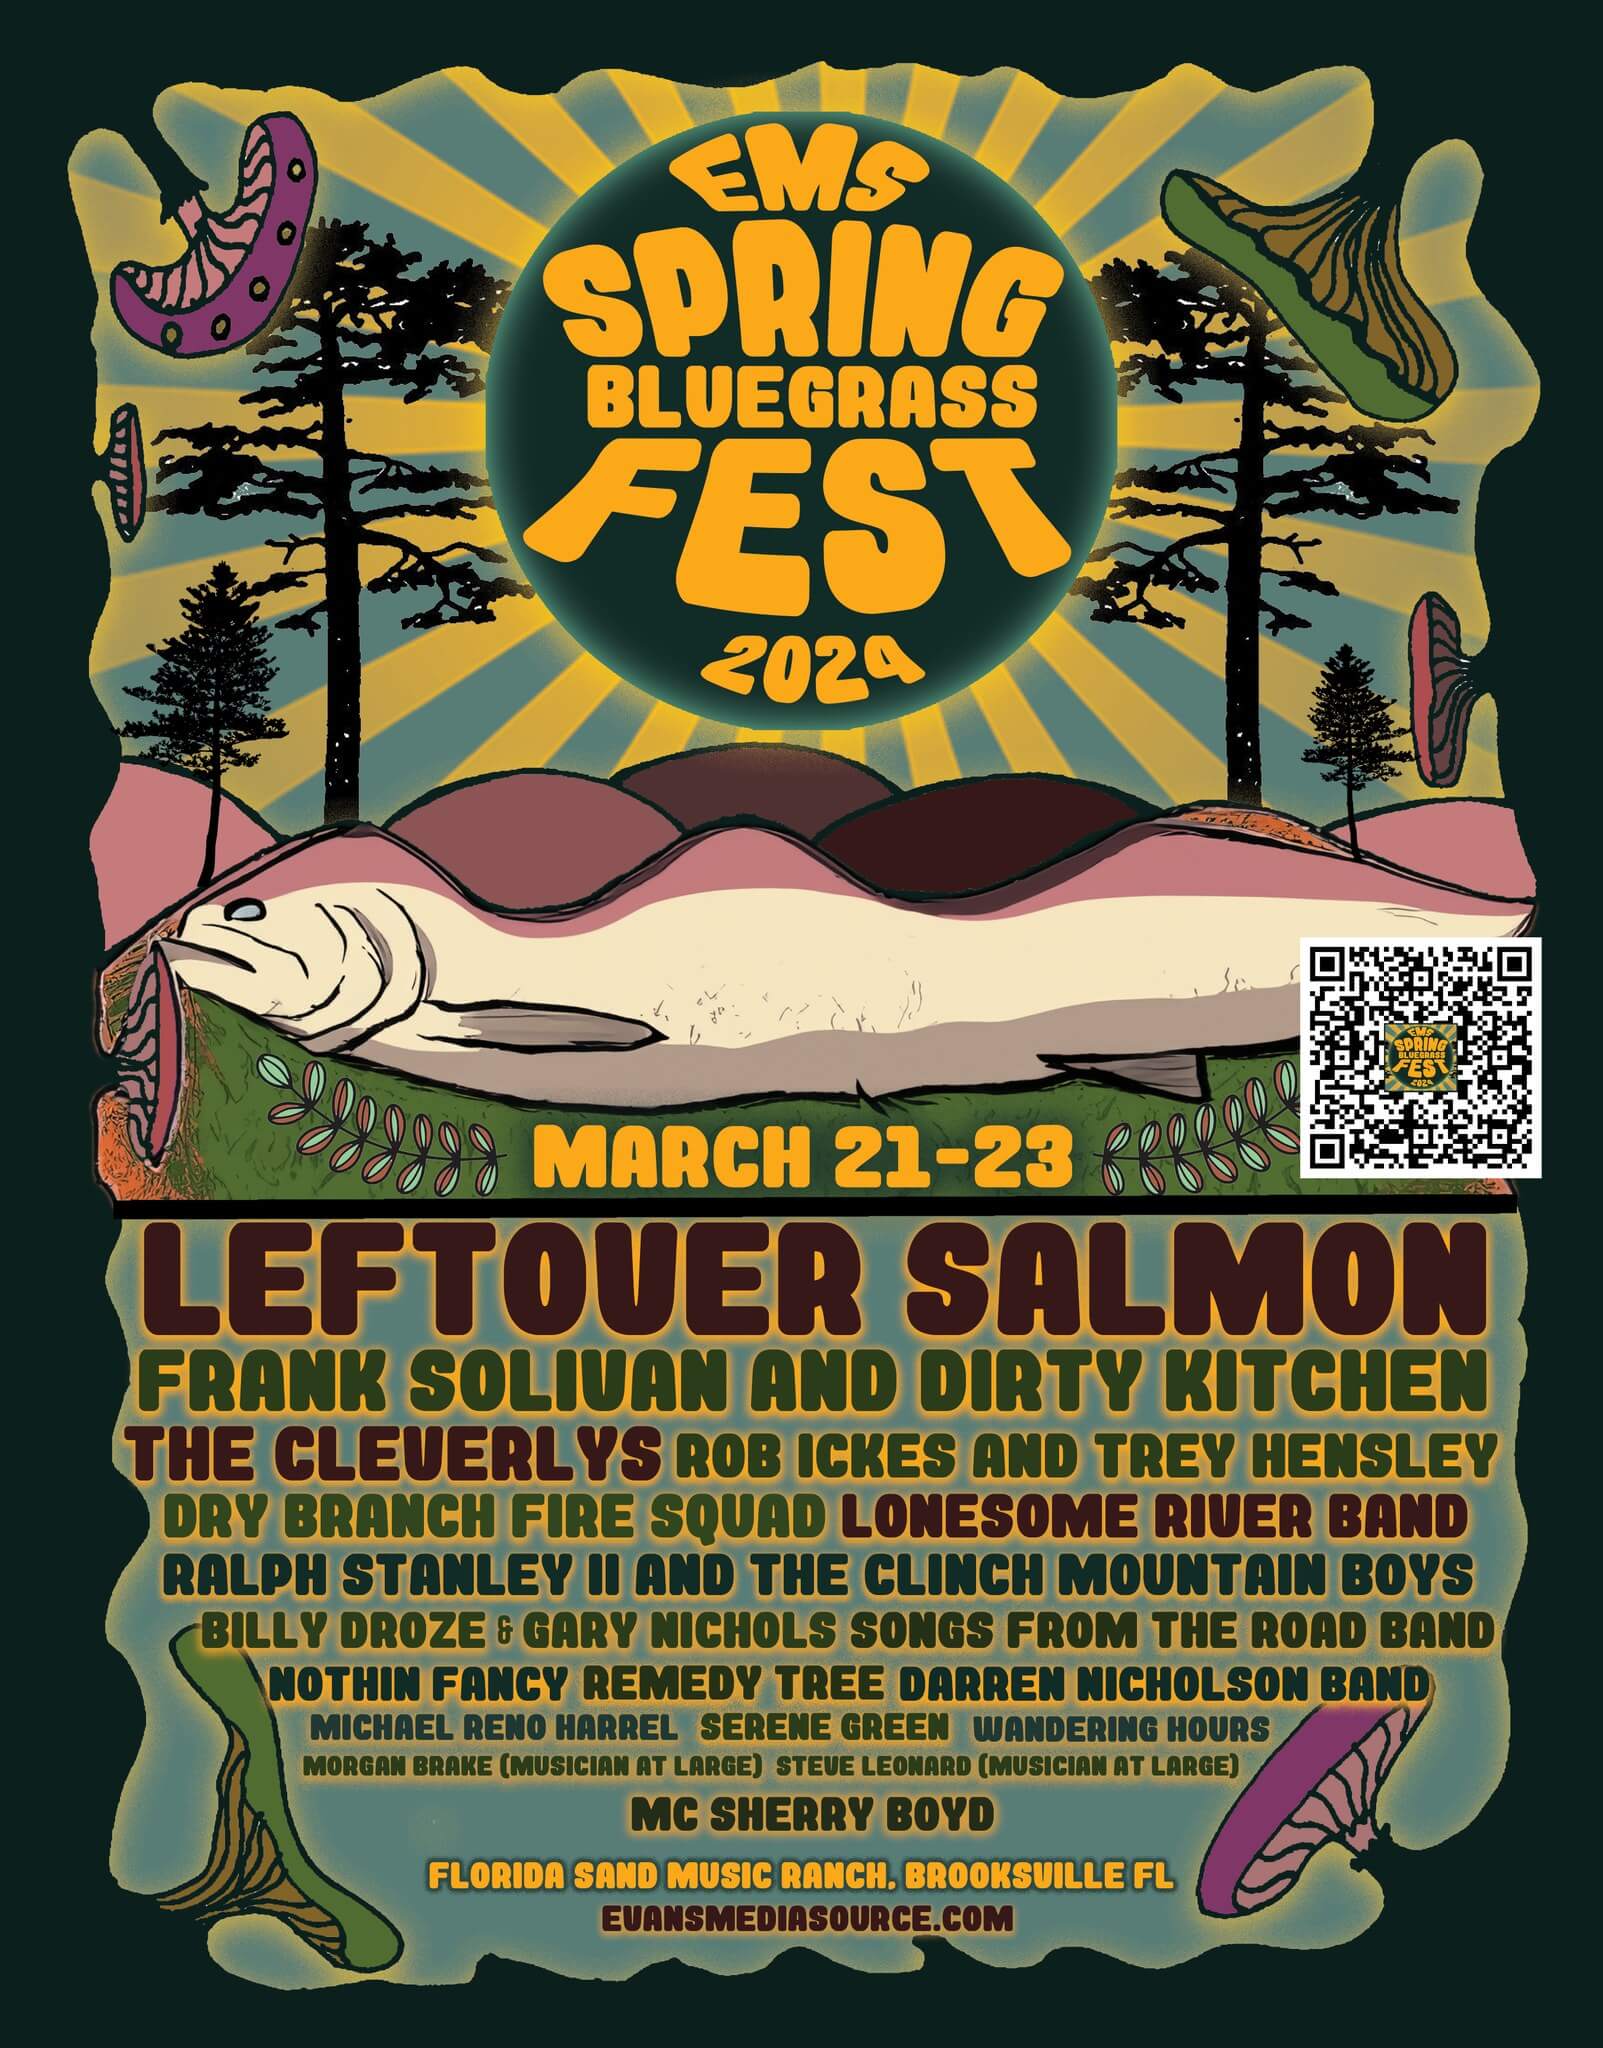 EMS Spring Bluegrass Fest promotinoal flyer 